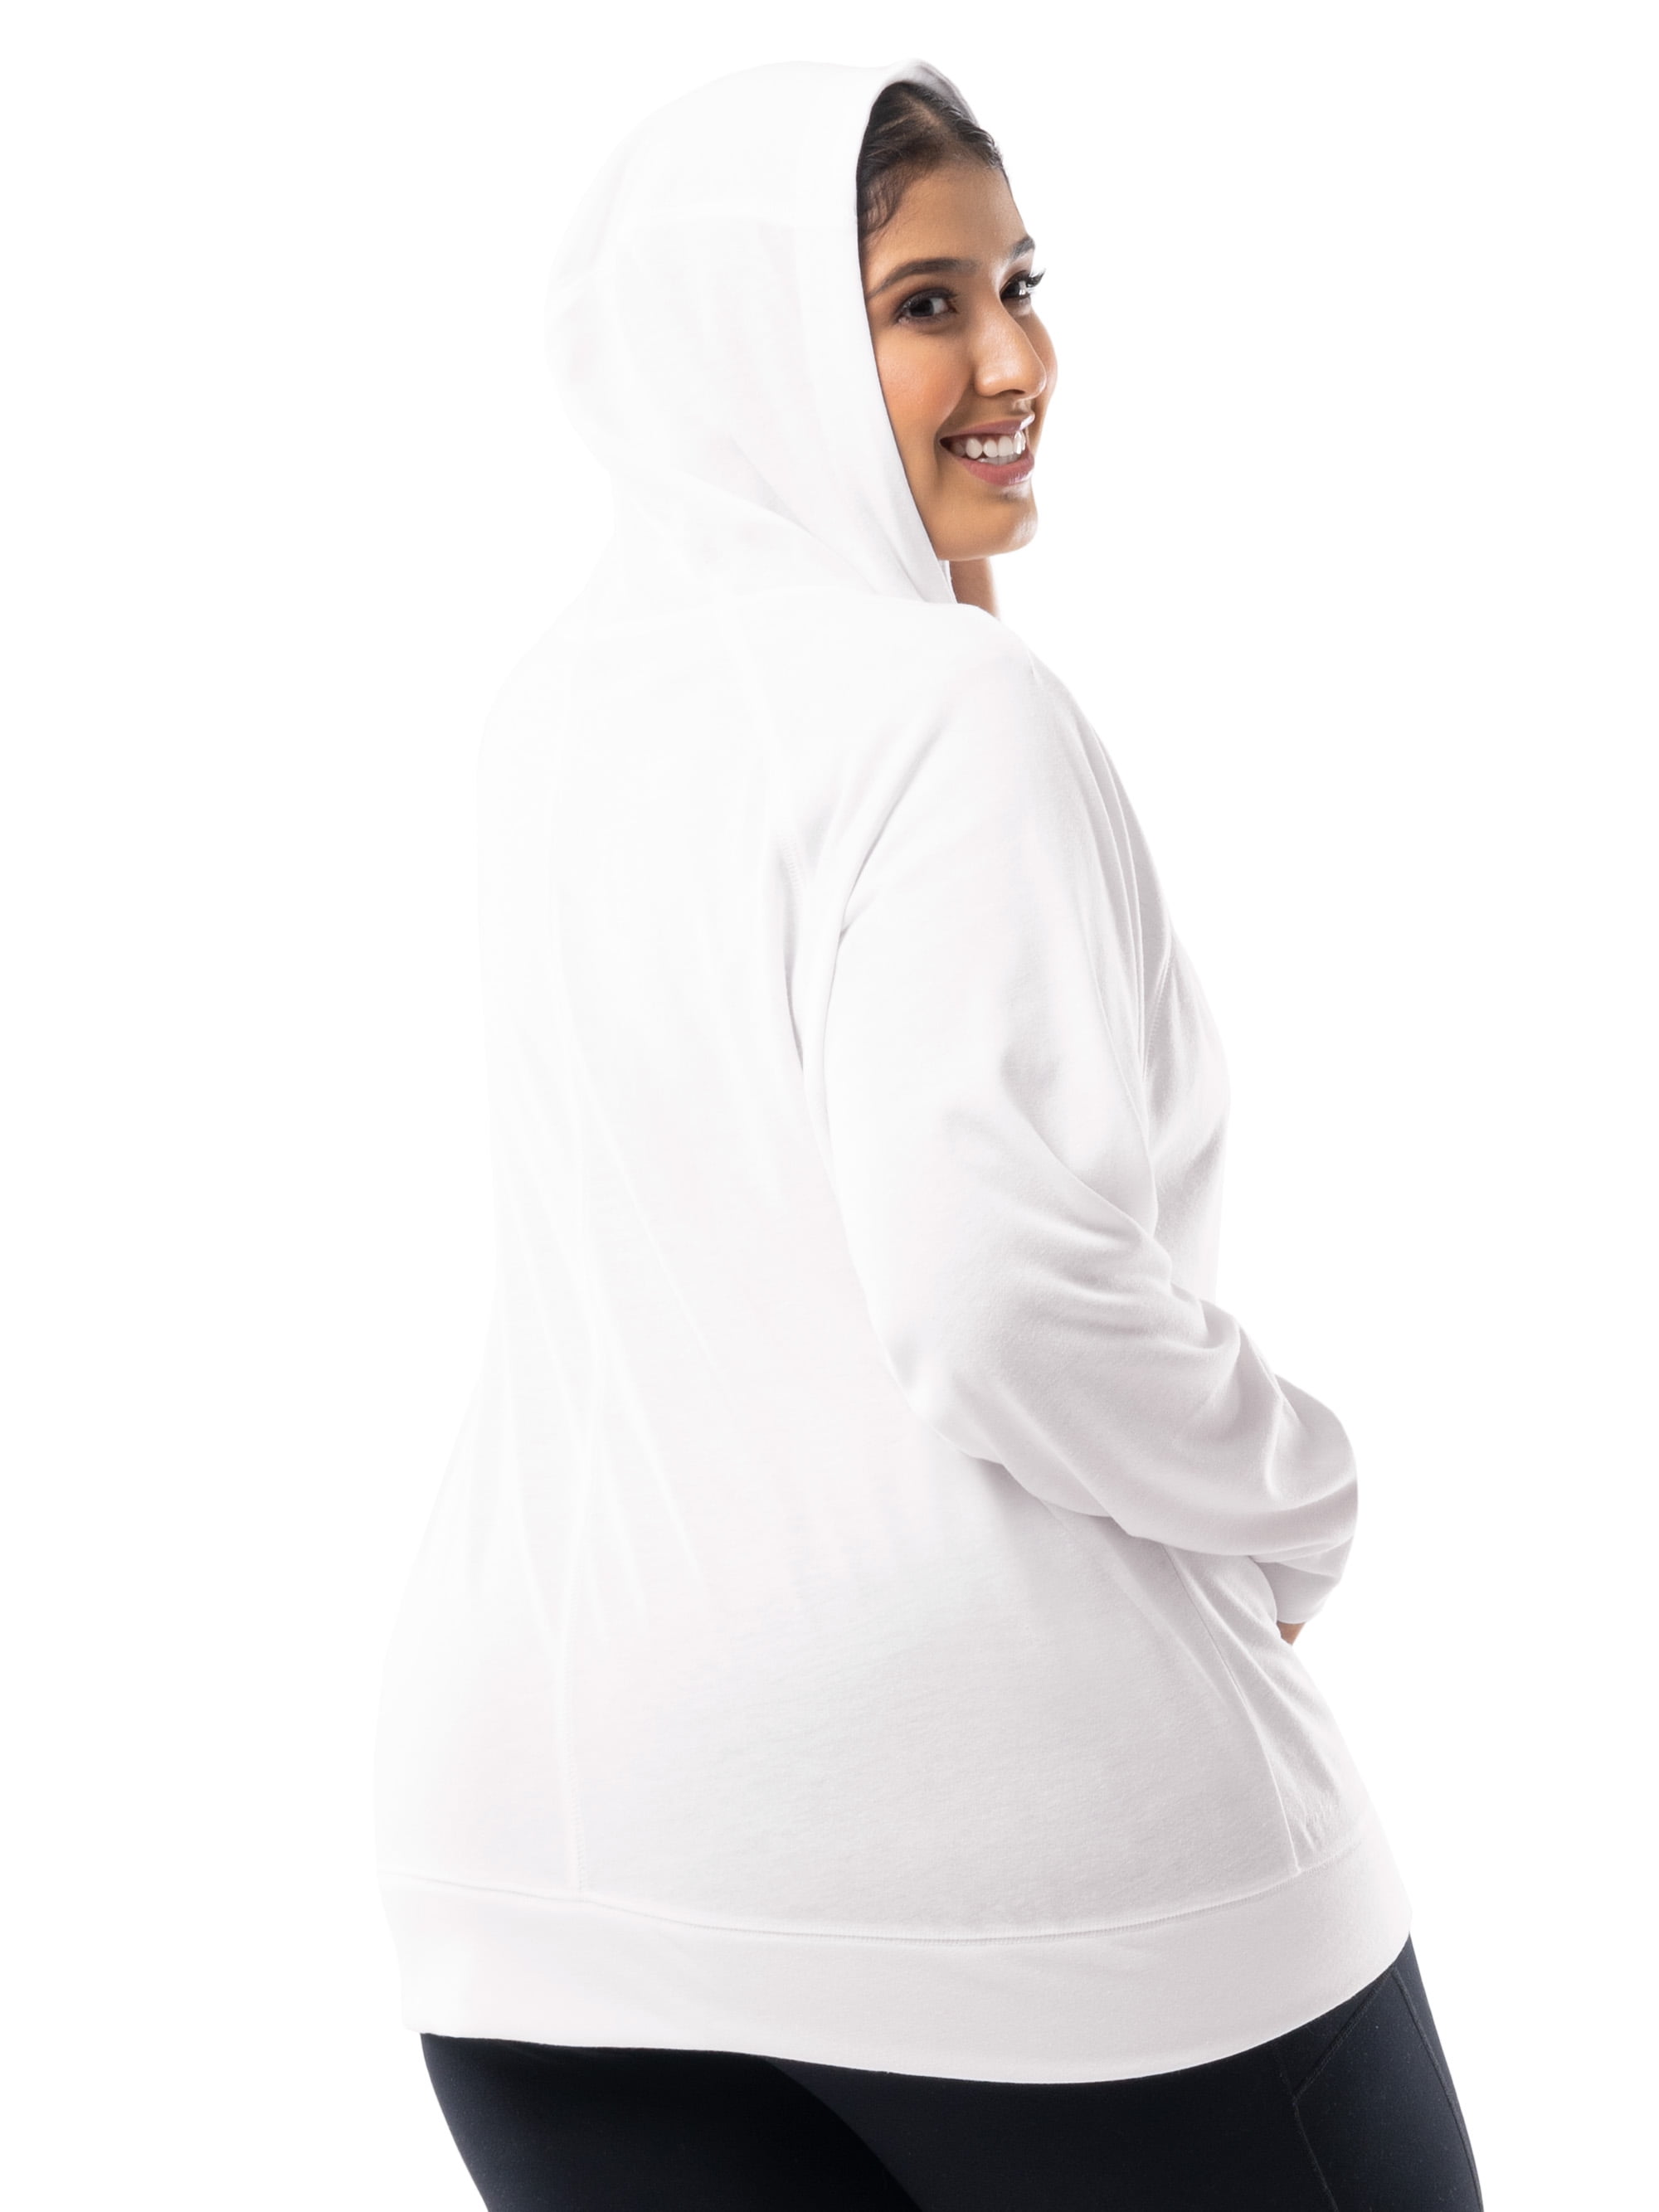 Iwpf - Women's Plus Sweatshirts and Hoodies - Louisville, Adult Unisex, Size: 5XL, Black